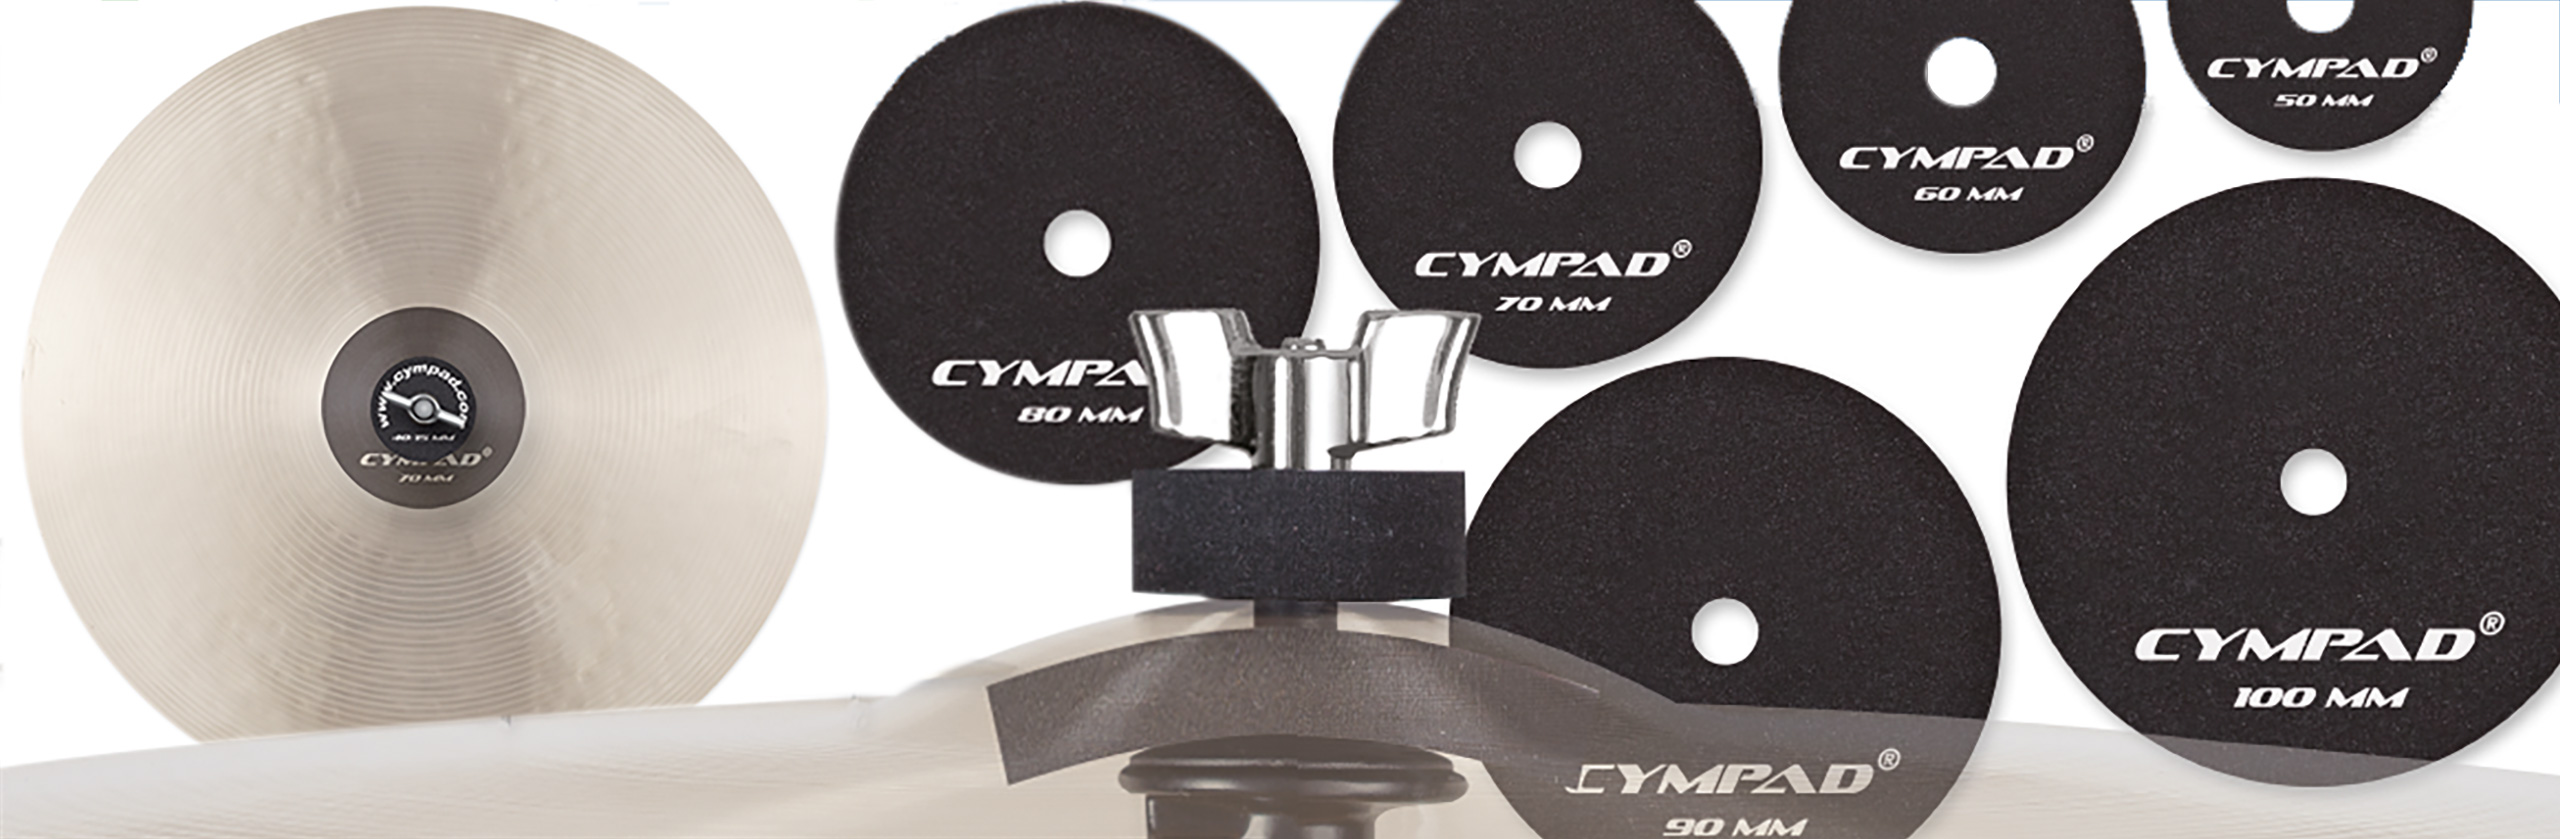 Cympad Moderator Cymbal Fine Tuning System